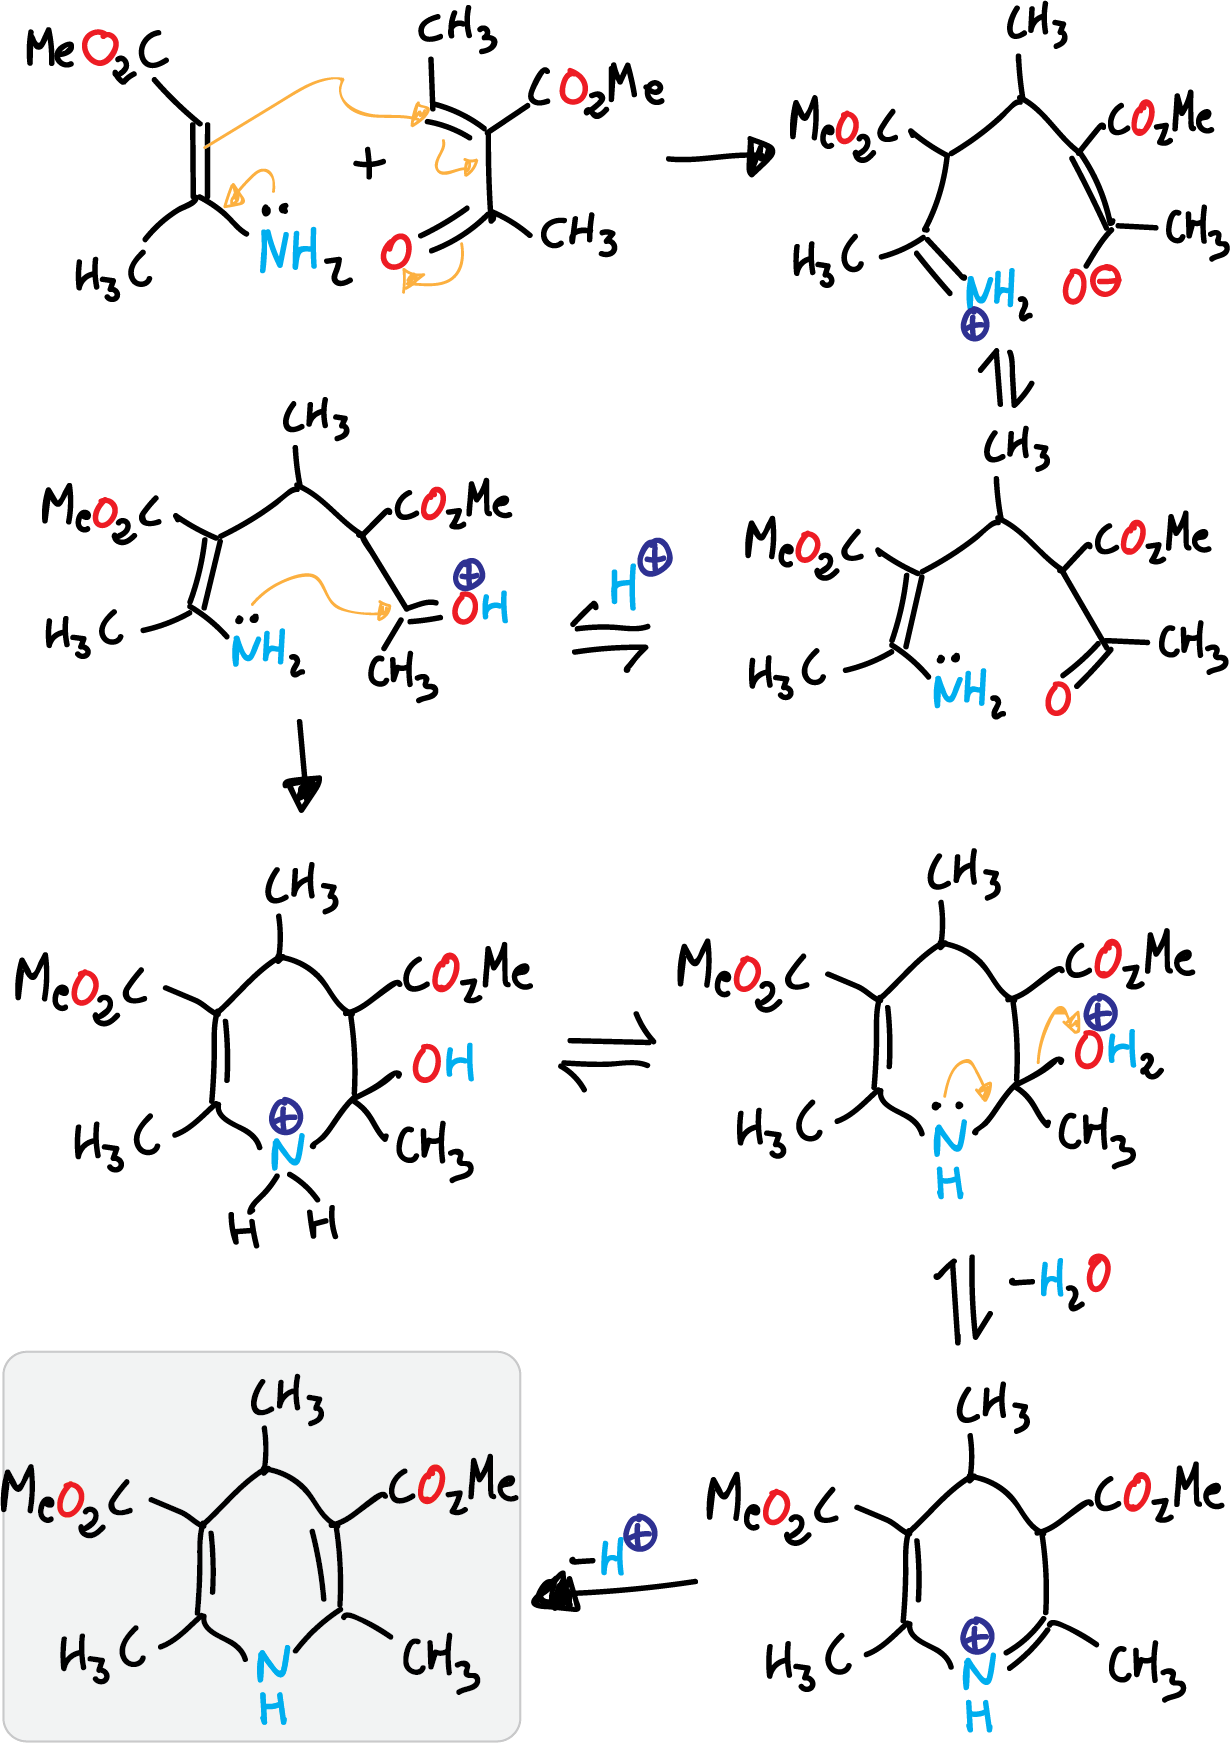 Mechanism of Hantzsch synthesis of pyridines (dihydropyridine formation)